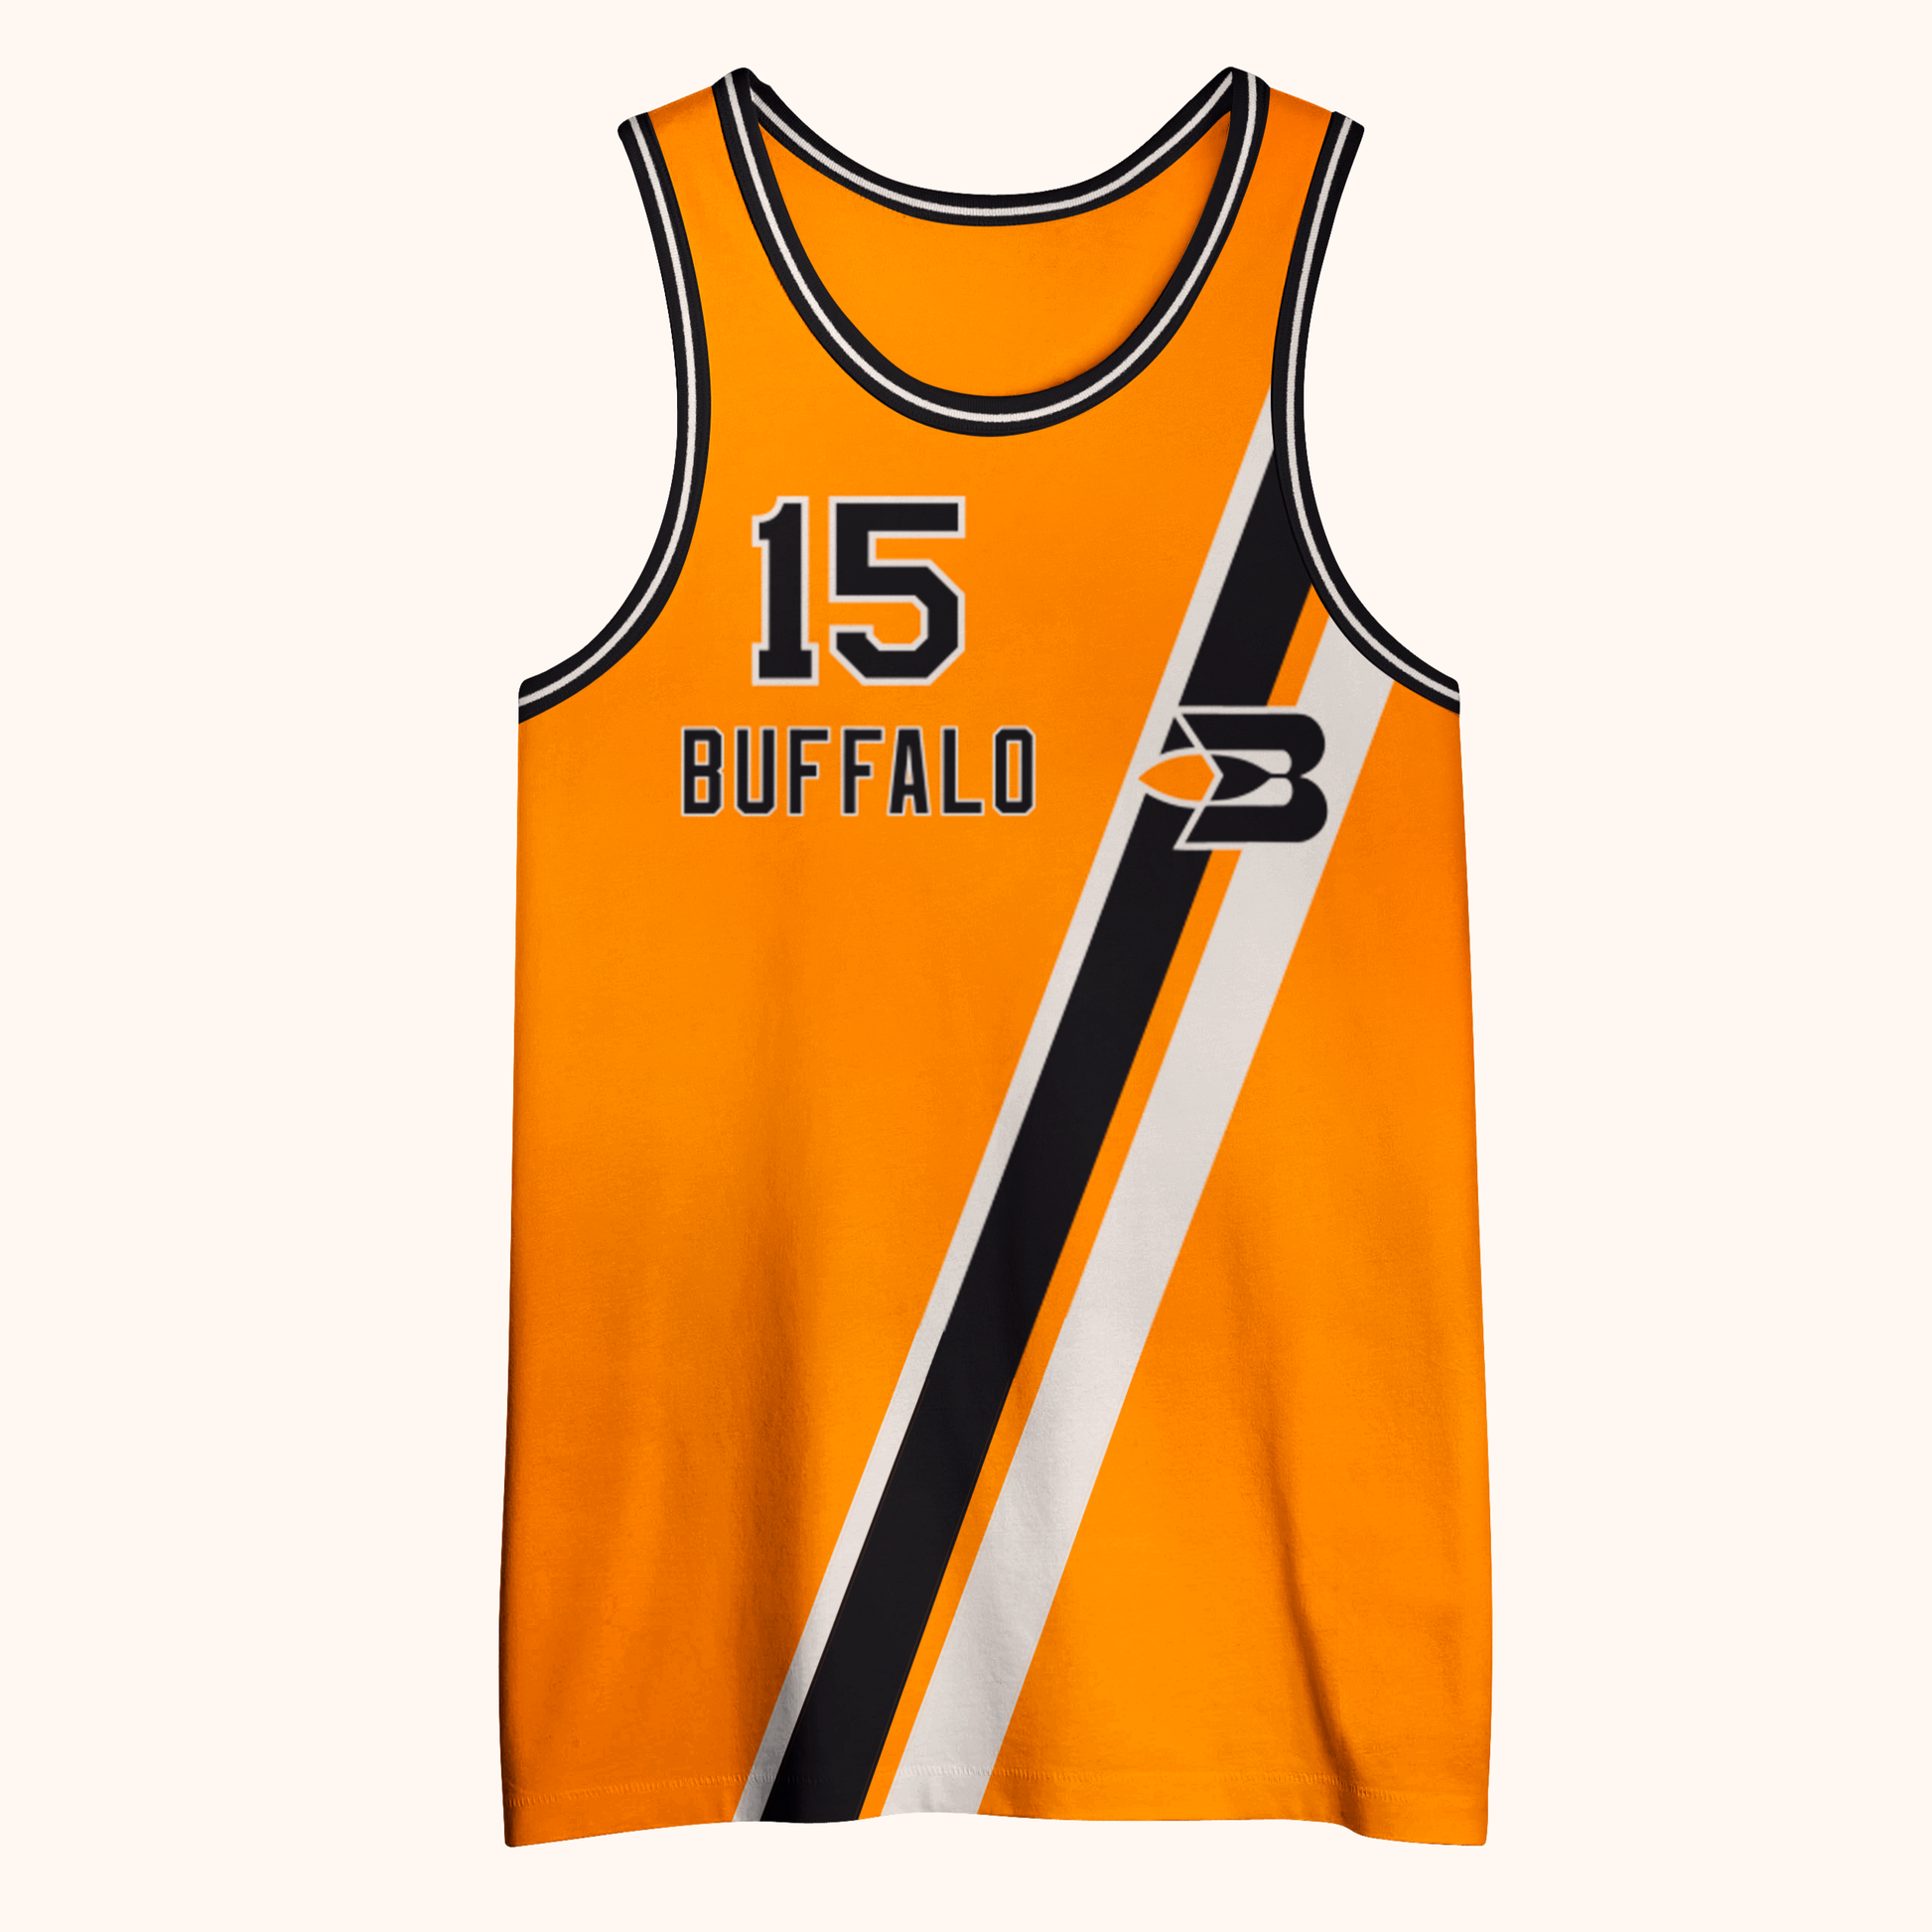 Buffalo Stripes Basketball Jersey - White - Large - Royal Retros